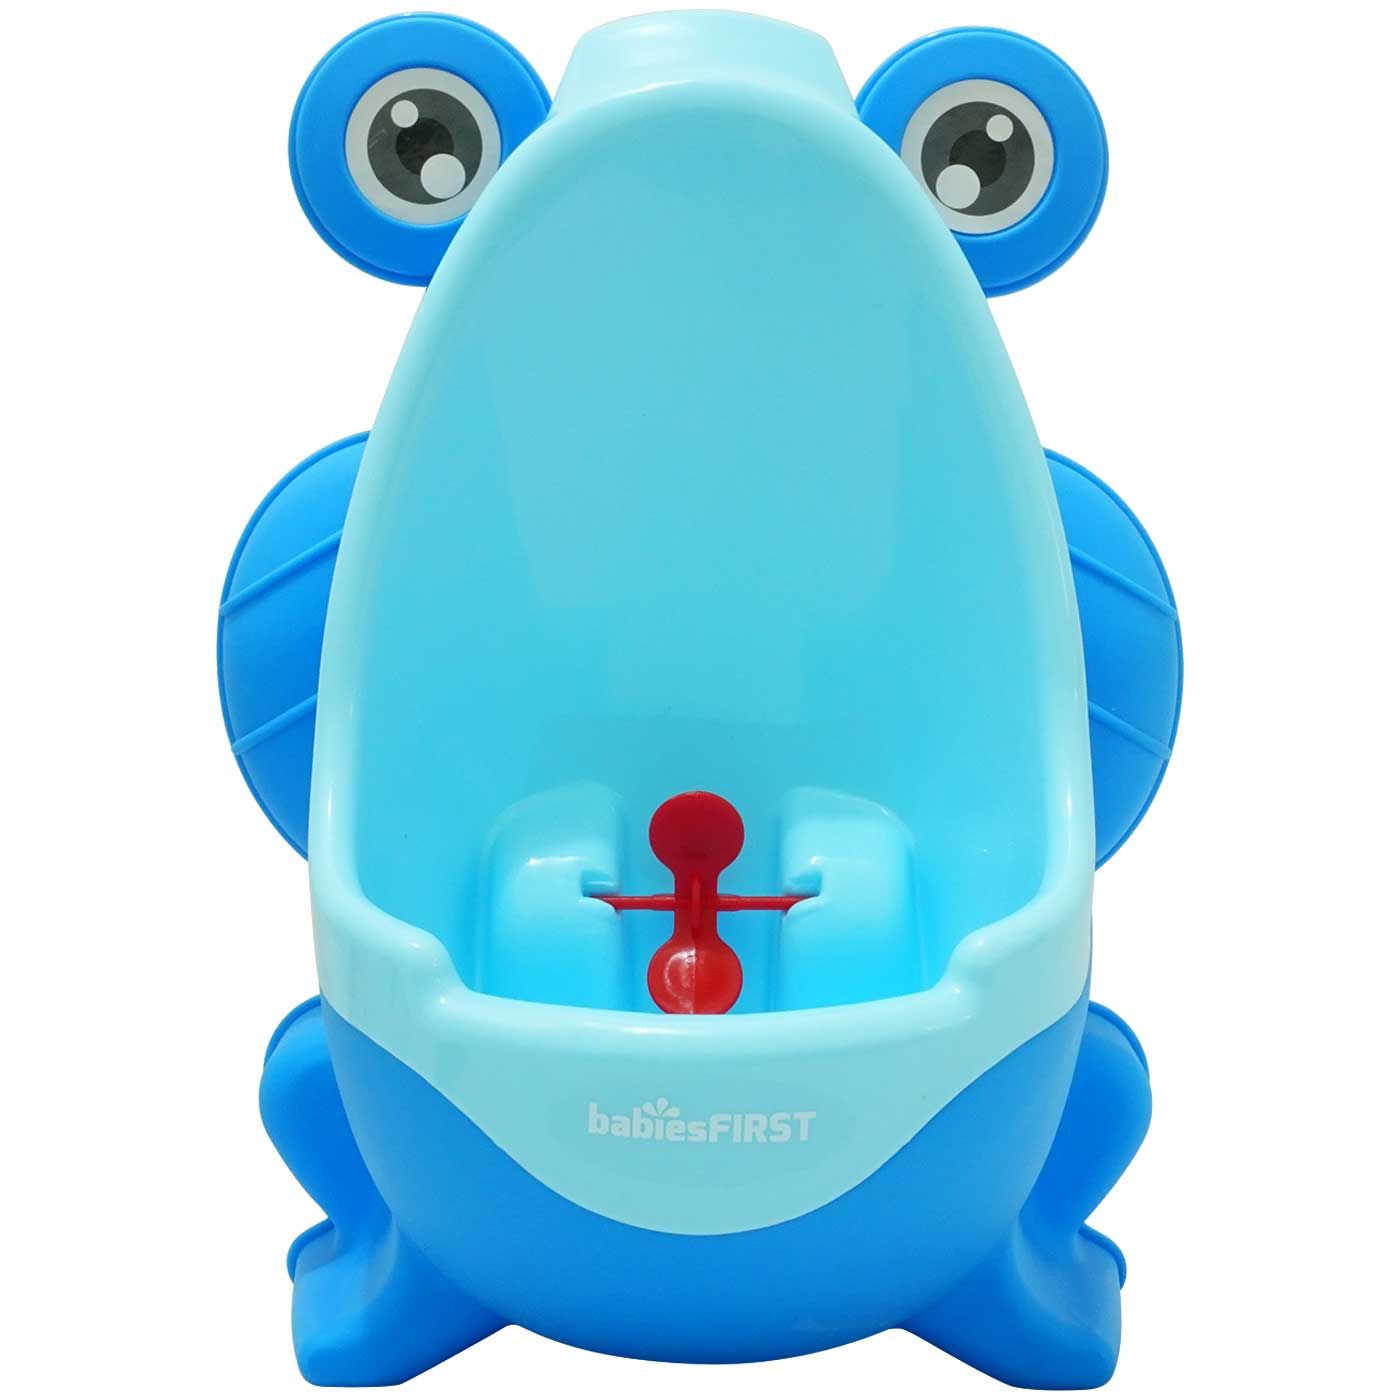 Babiesfirst Kids Training Urinal Blue - 6